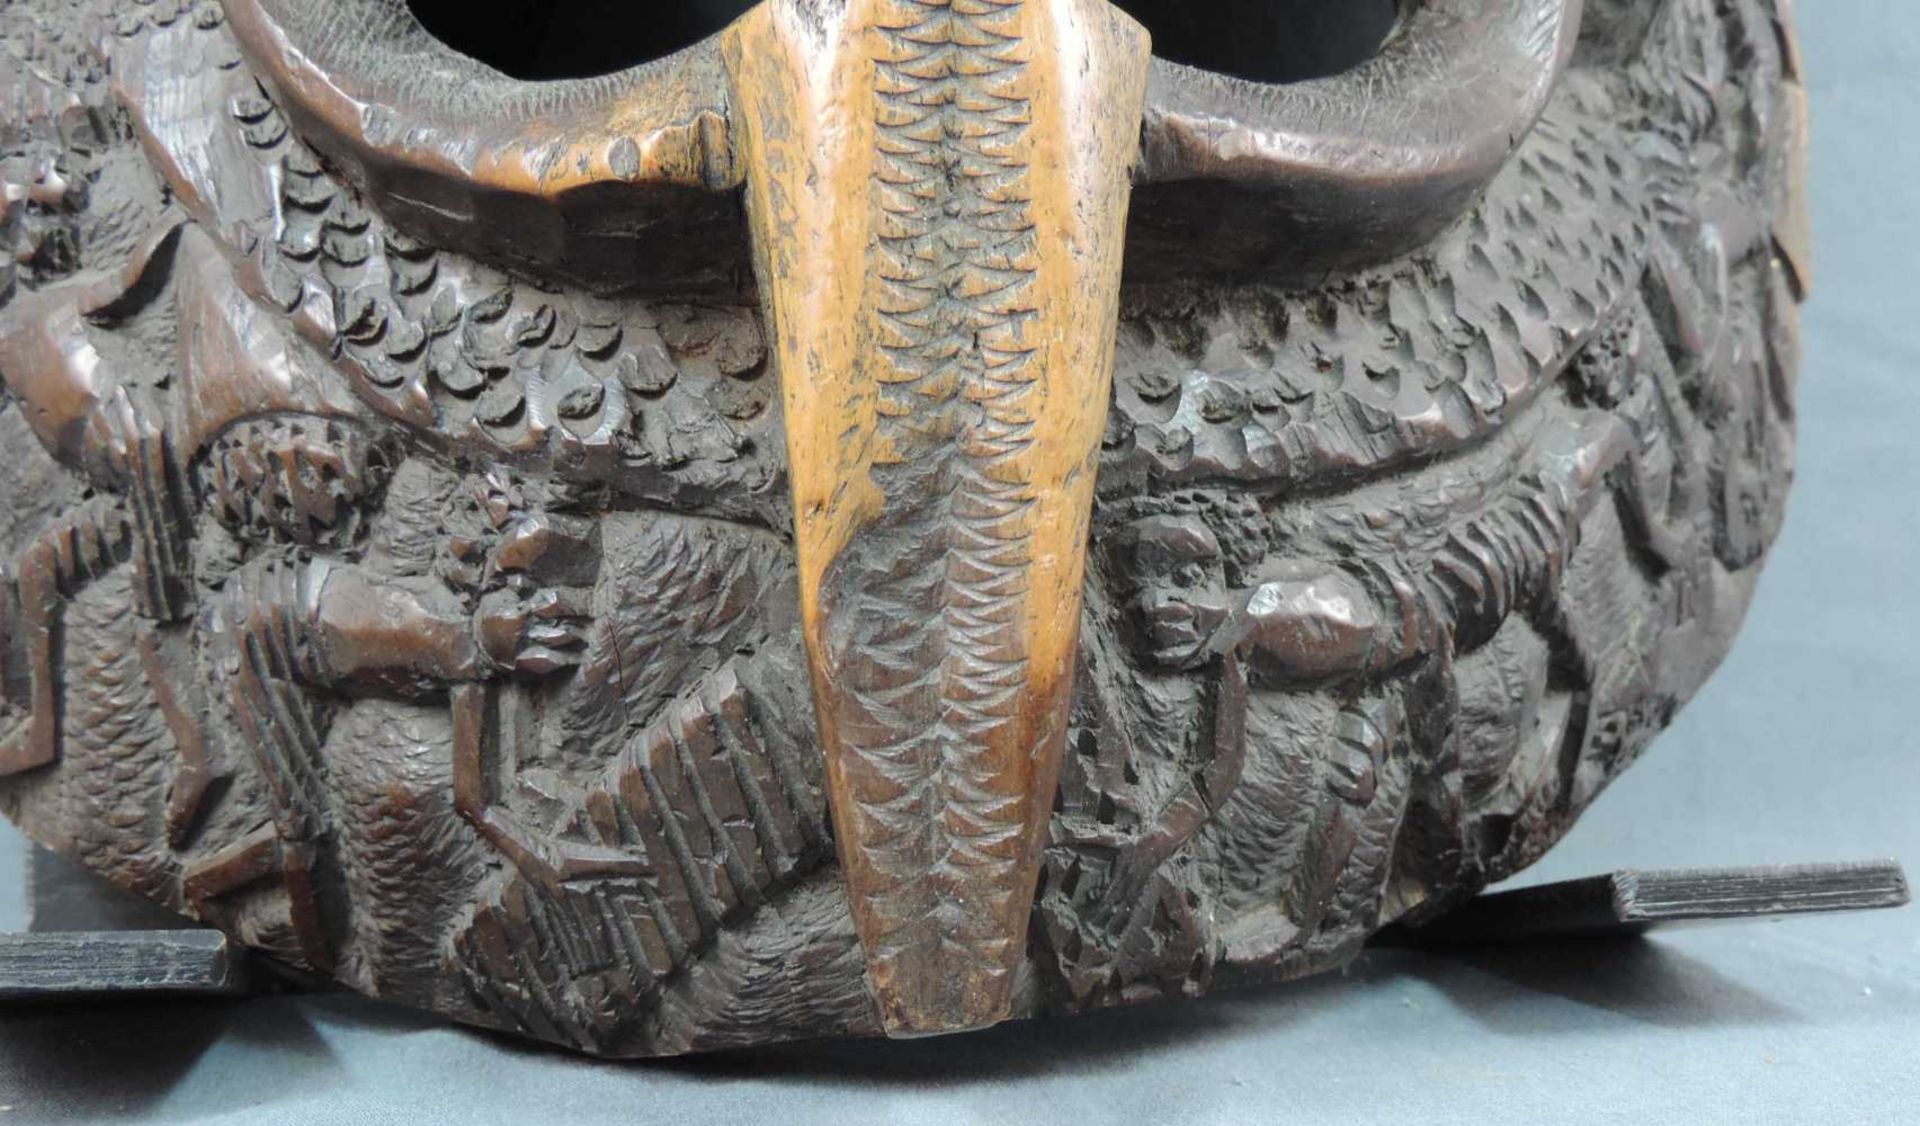 Große Maske, wohl Babanki, Kamerun 1. Hälfte 20. Jahrhundert. 58 cm x 35 cm x 16 cm. Hartholz. Die - Bild 2 aus 6